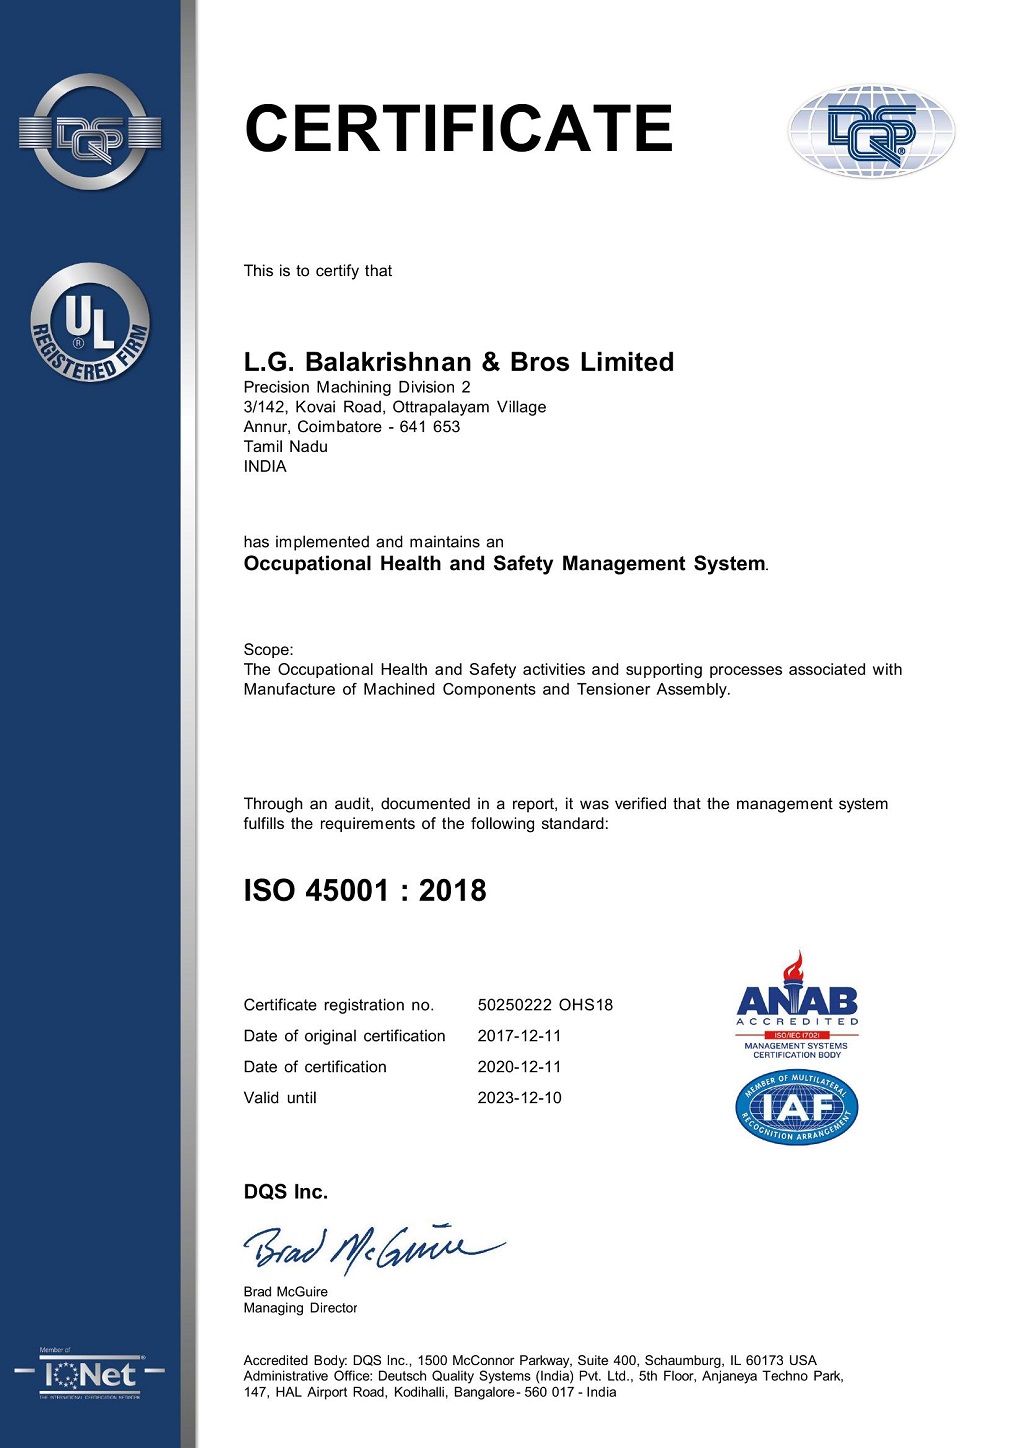 LGB PMD2_Annur ISO 450012018